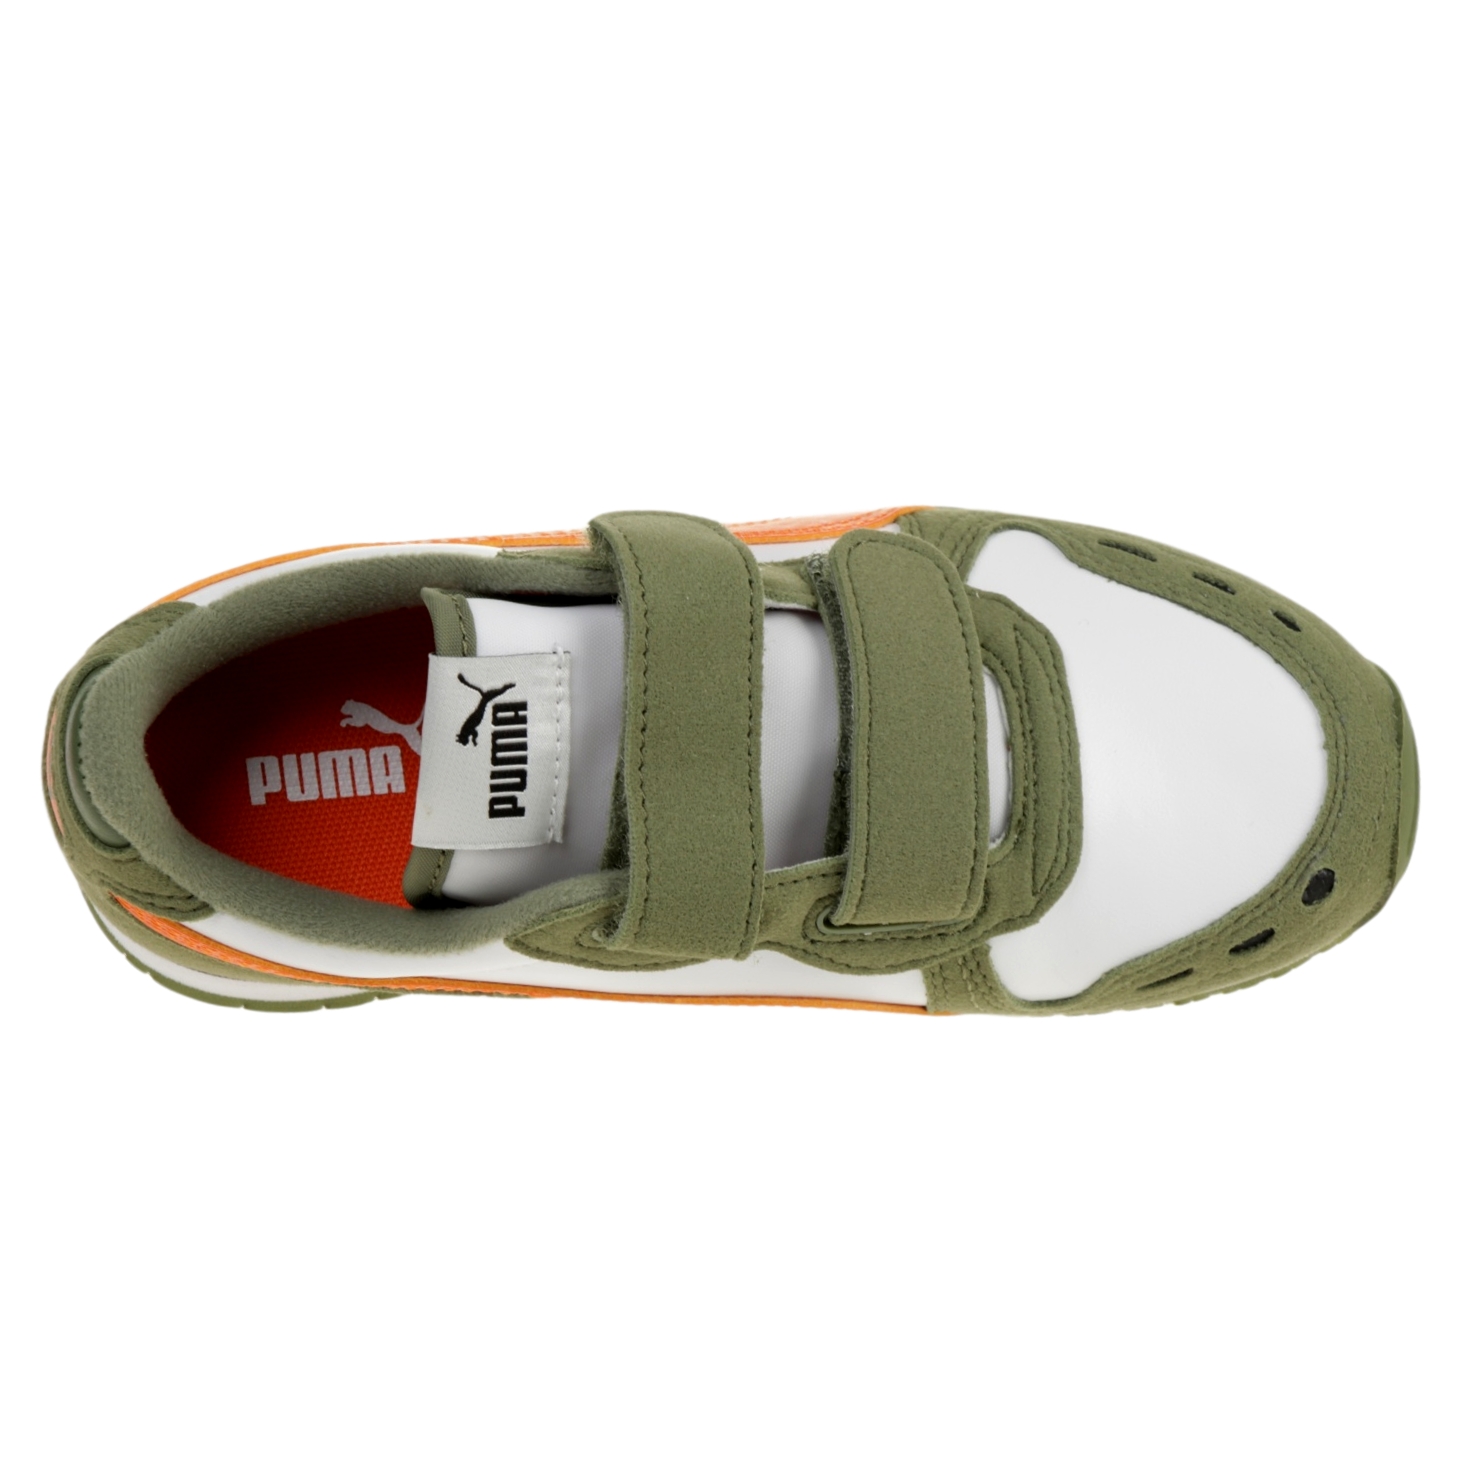 PUMA Cabana Racer SL V PS Kinder Sneaker Schuhe 360732 Grün